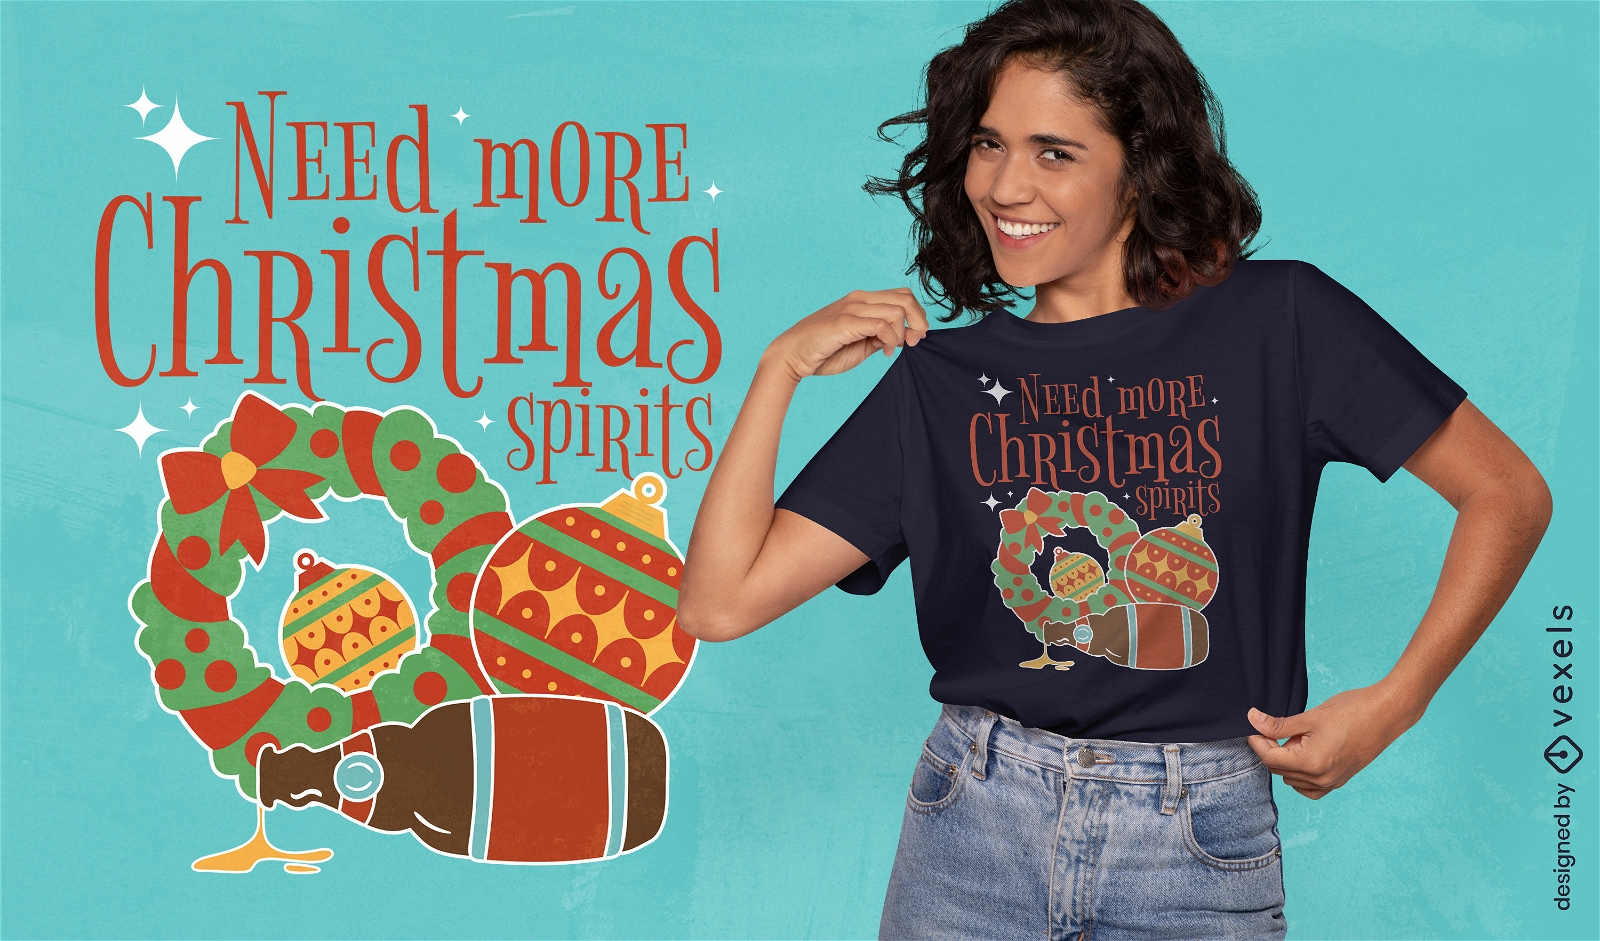 Diseño de camiseta con cita de espíritus navideños.